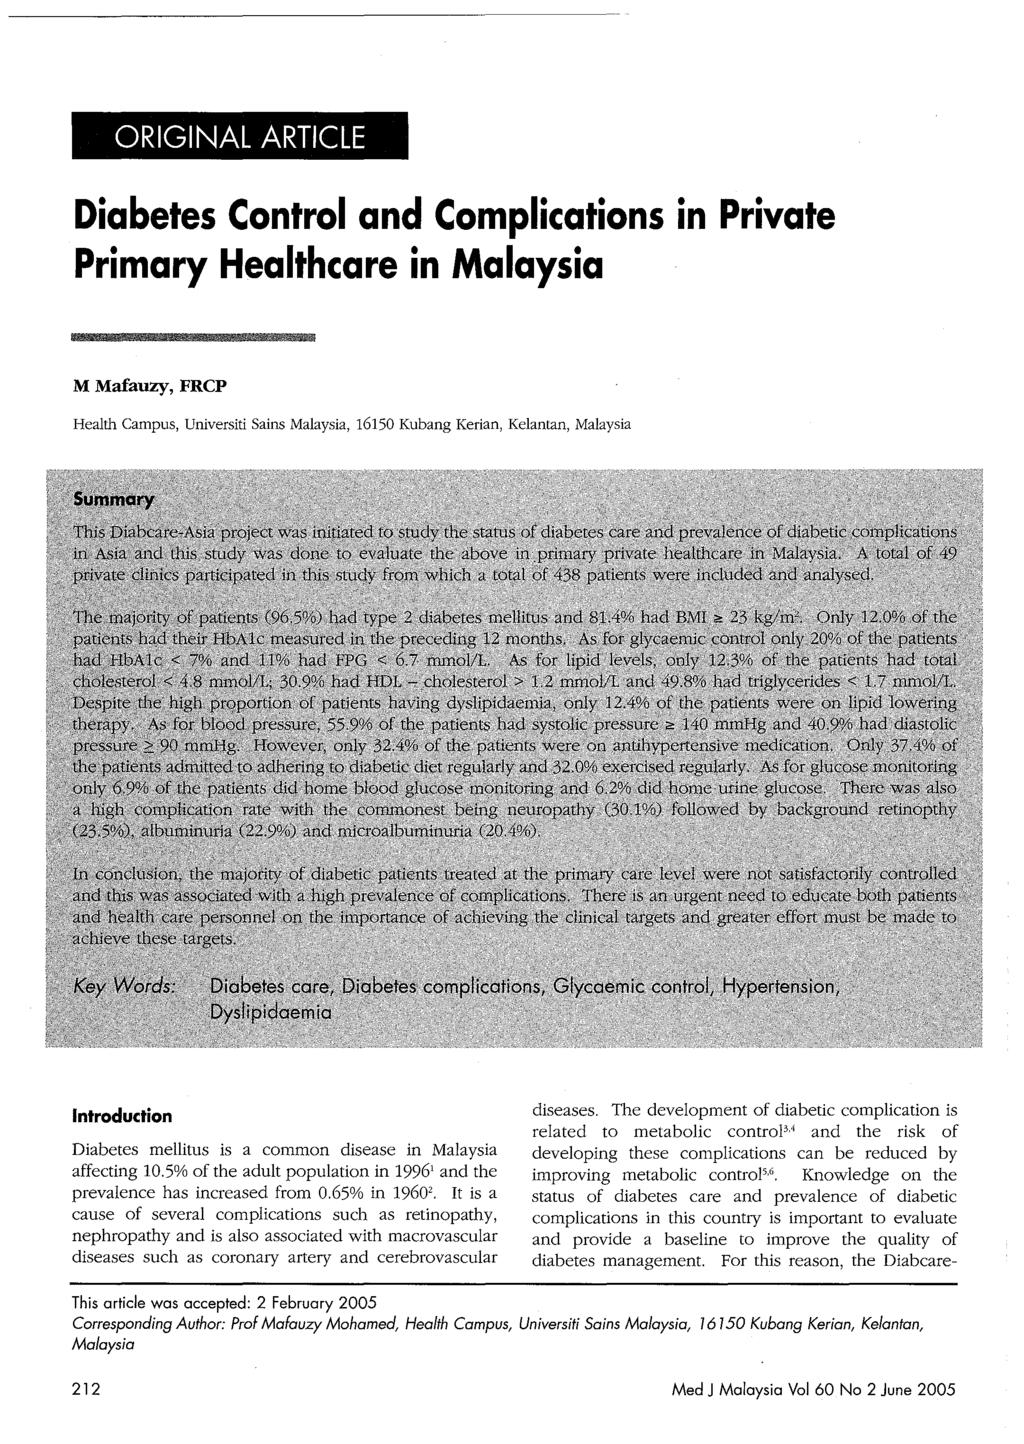 ORIGINAL ARTICLE Diabetes Control and Complications in Private Primary Healthcare in Malaysia M Mafauzy, FRCP Health Campus, Universiti Sains Malaysia, 16150 Kubang Kerian, Kelantan, Malaysia